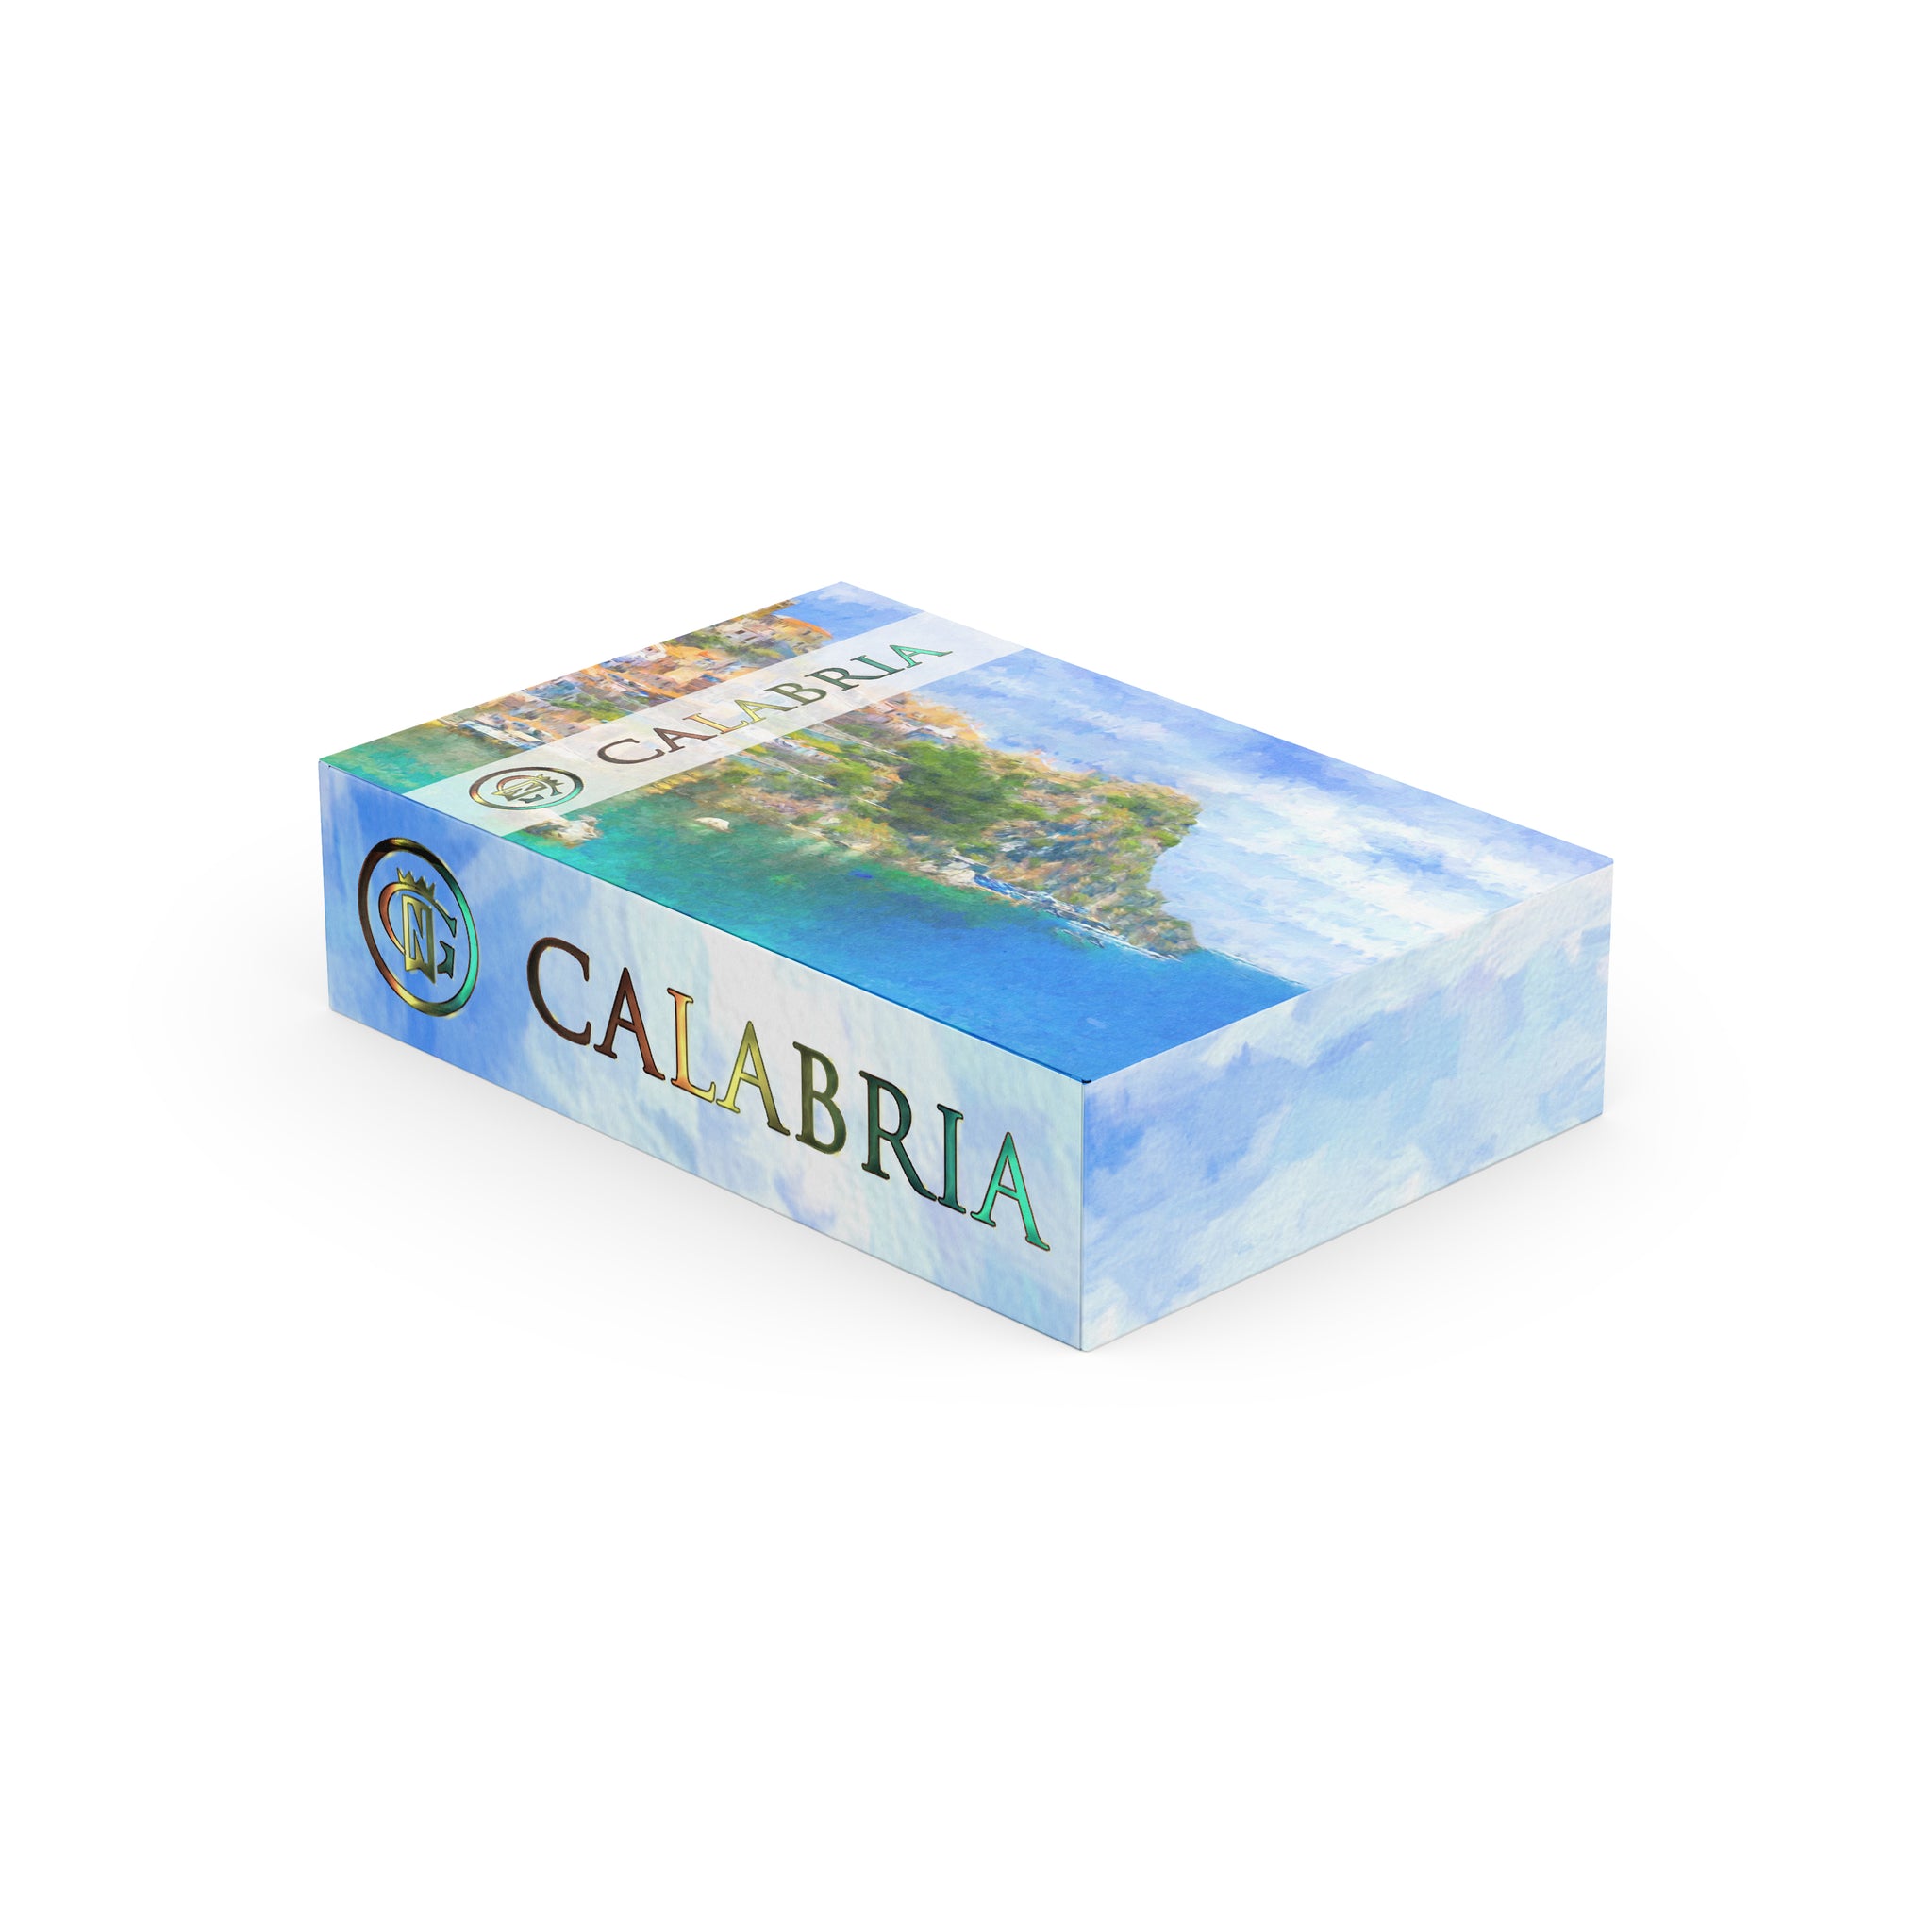 Calabria Utility Bar Soap